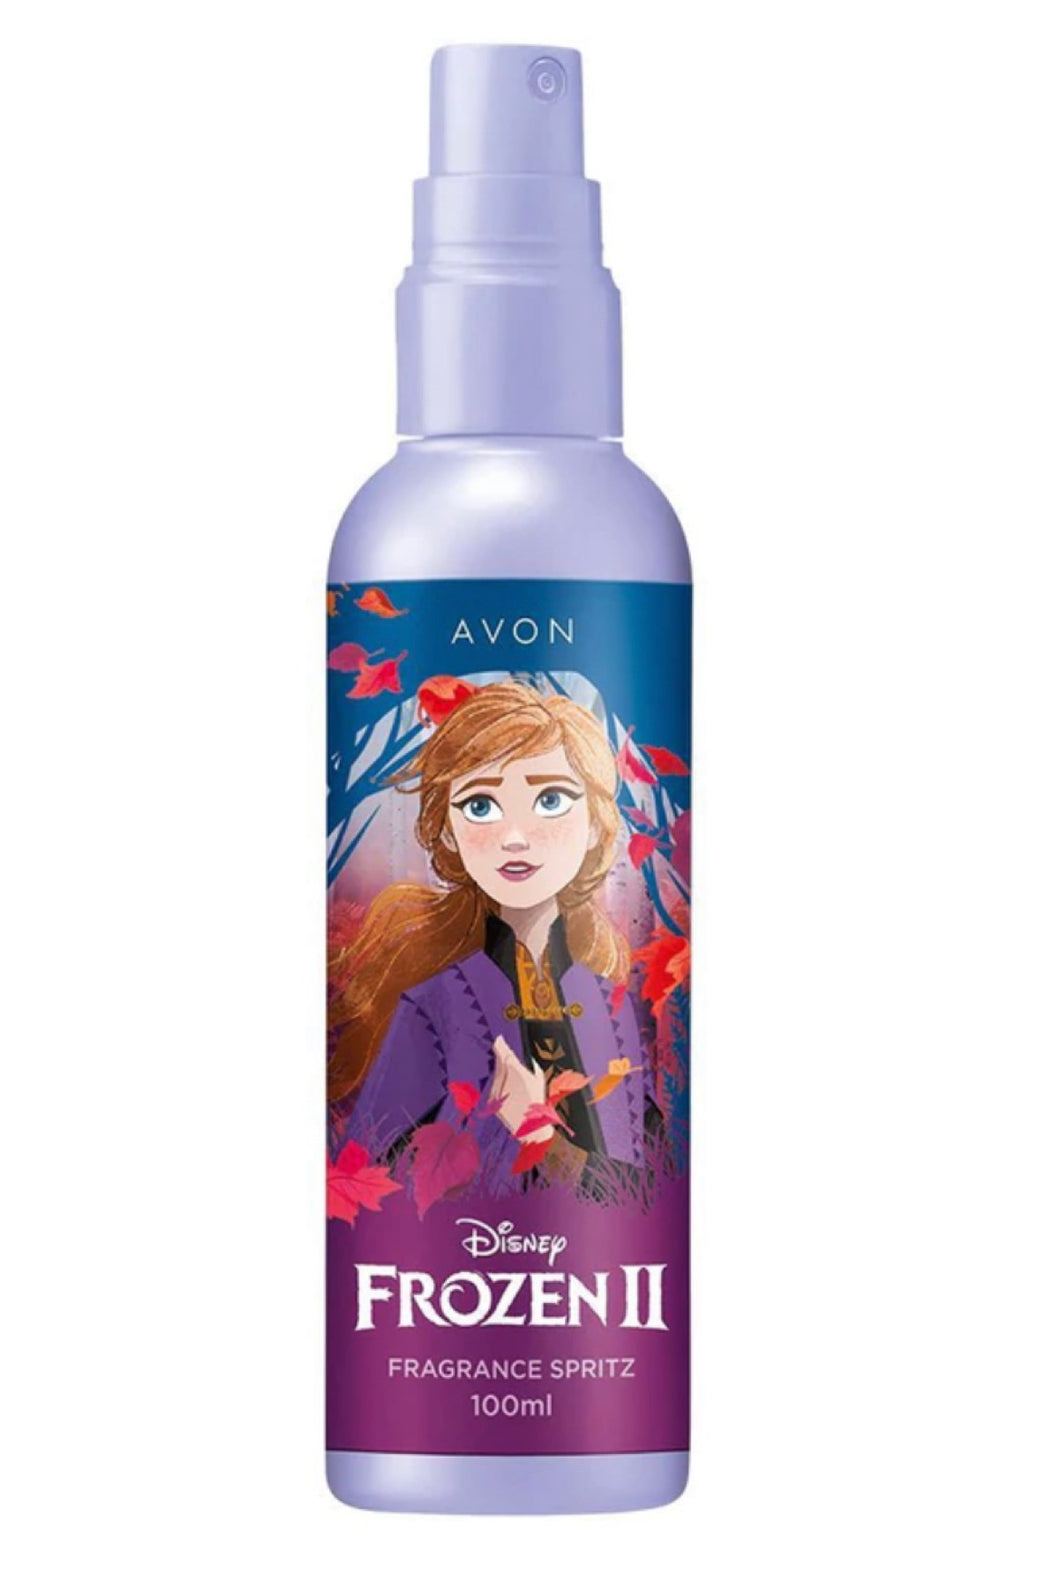 Frozen II Fragrance Spritz 100ml